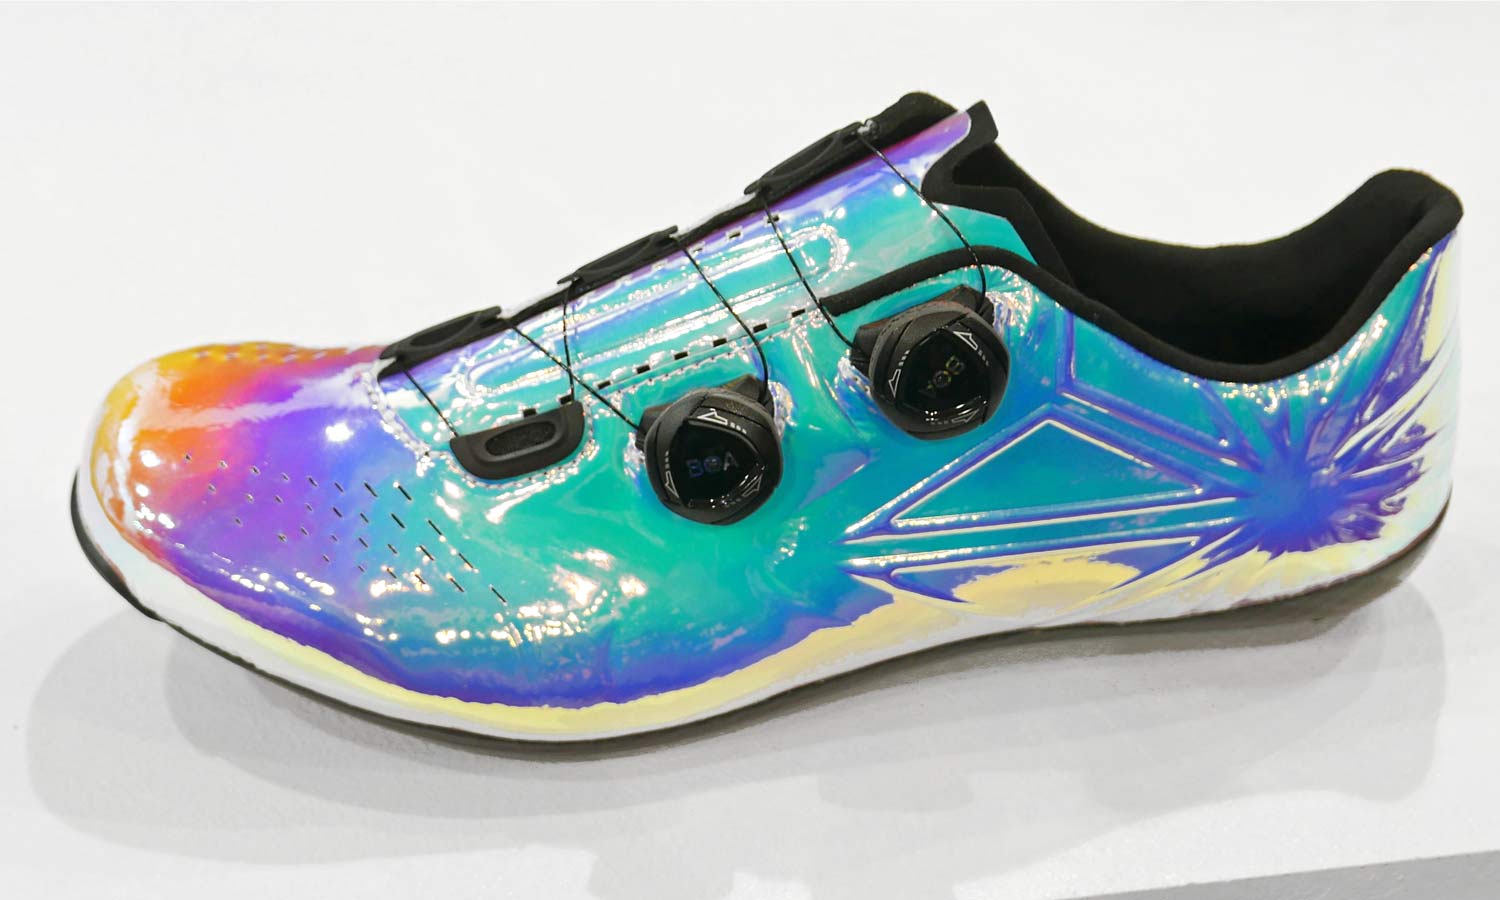 Supacaz shiny goes next-level for Sagan’s next shoes? Plus matching eMTB pedals!